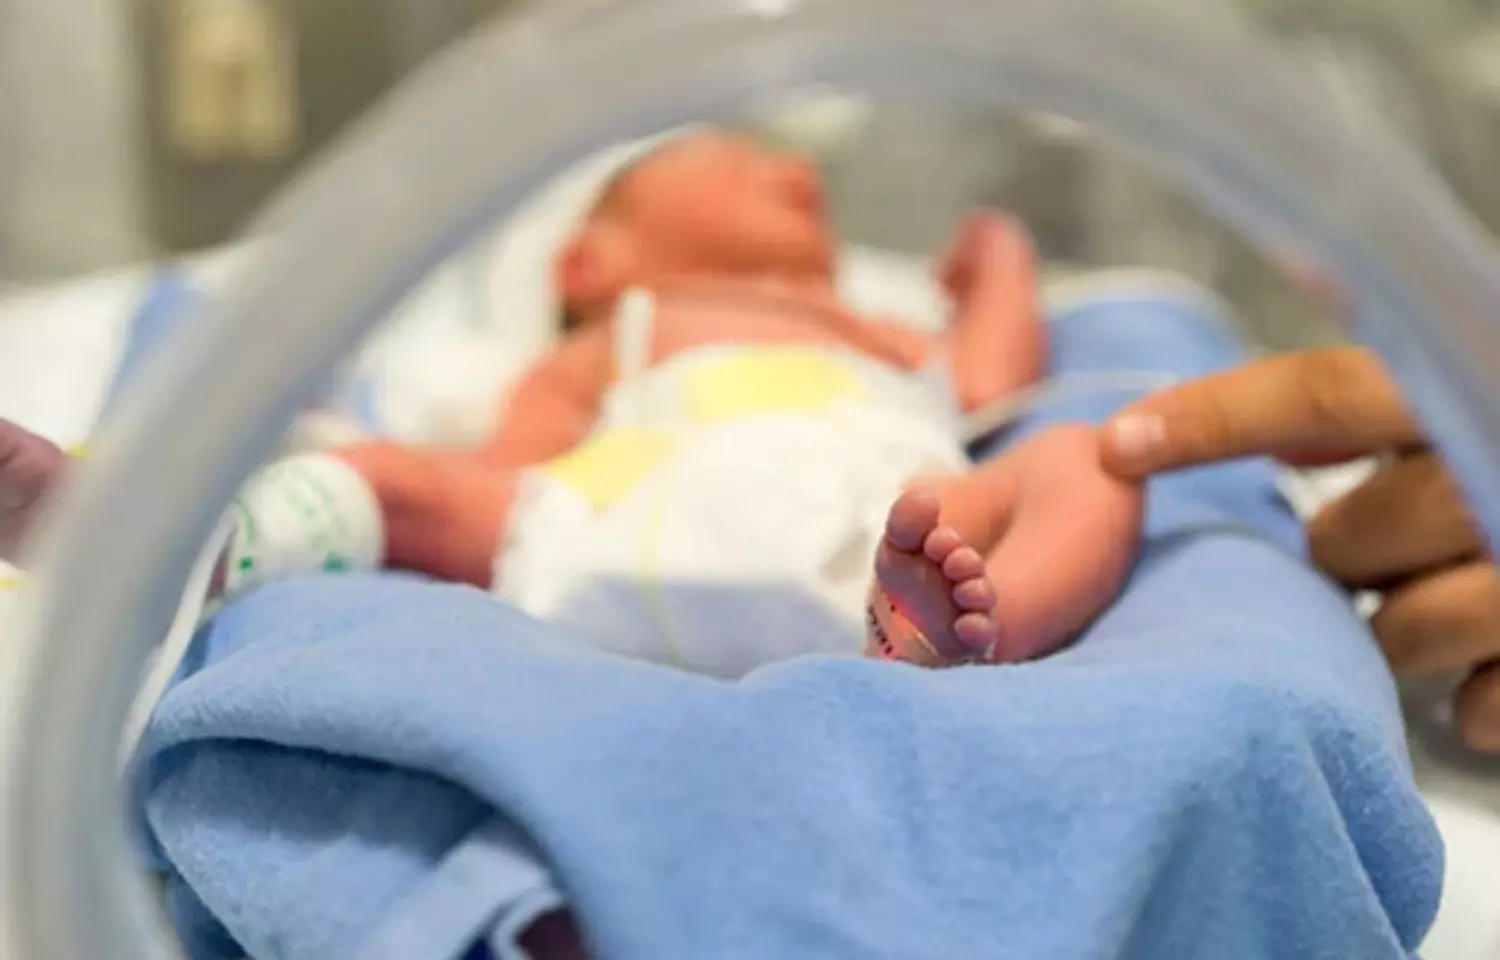 How to avoid epinephrine dosing errors in infants? JAMA study provides insight